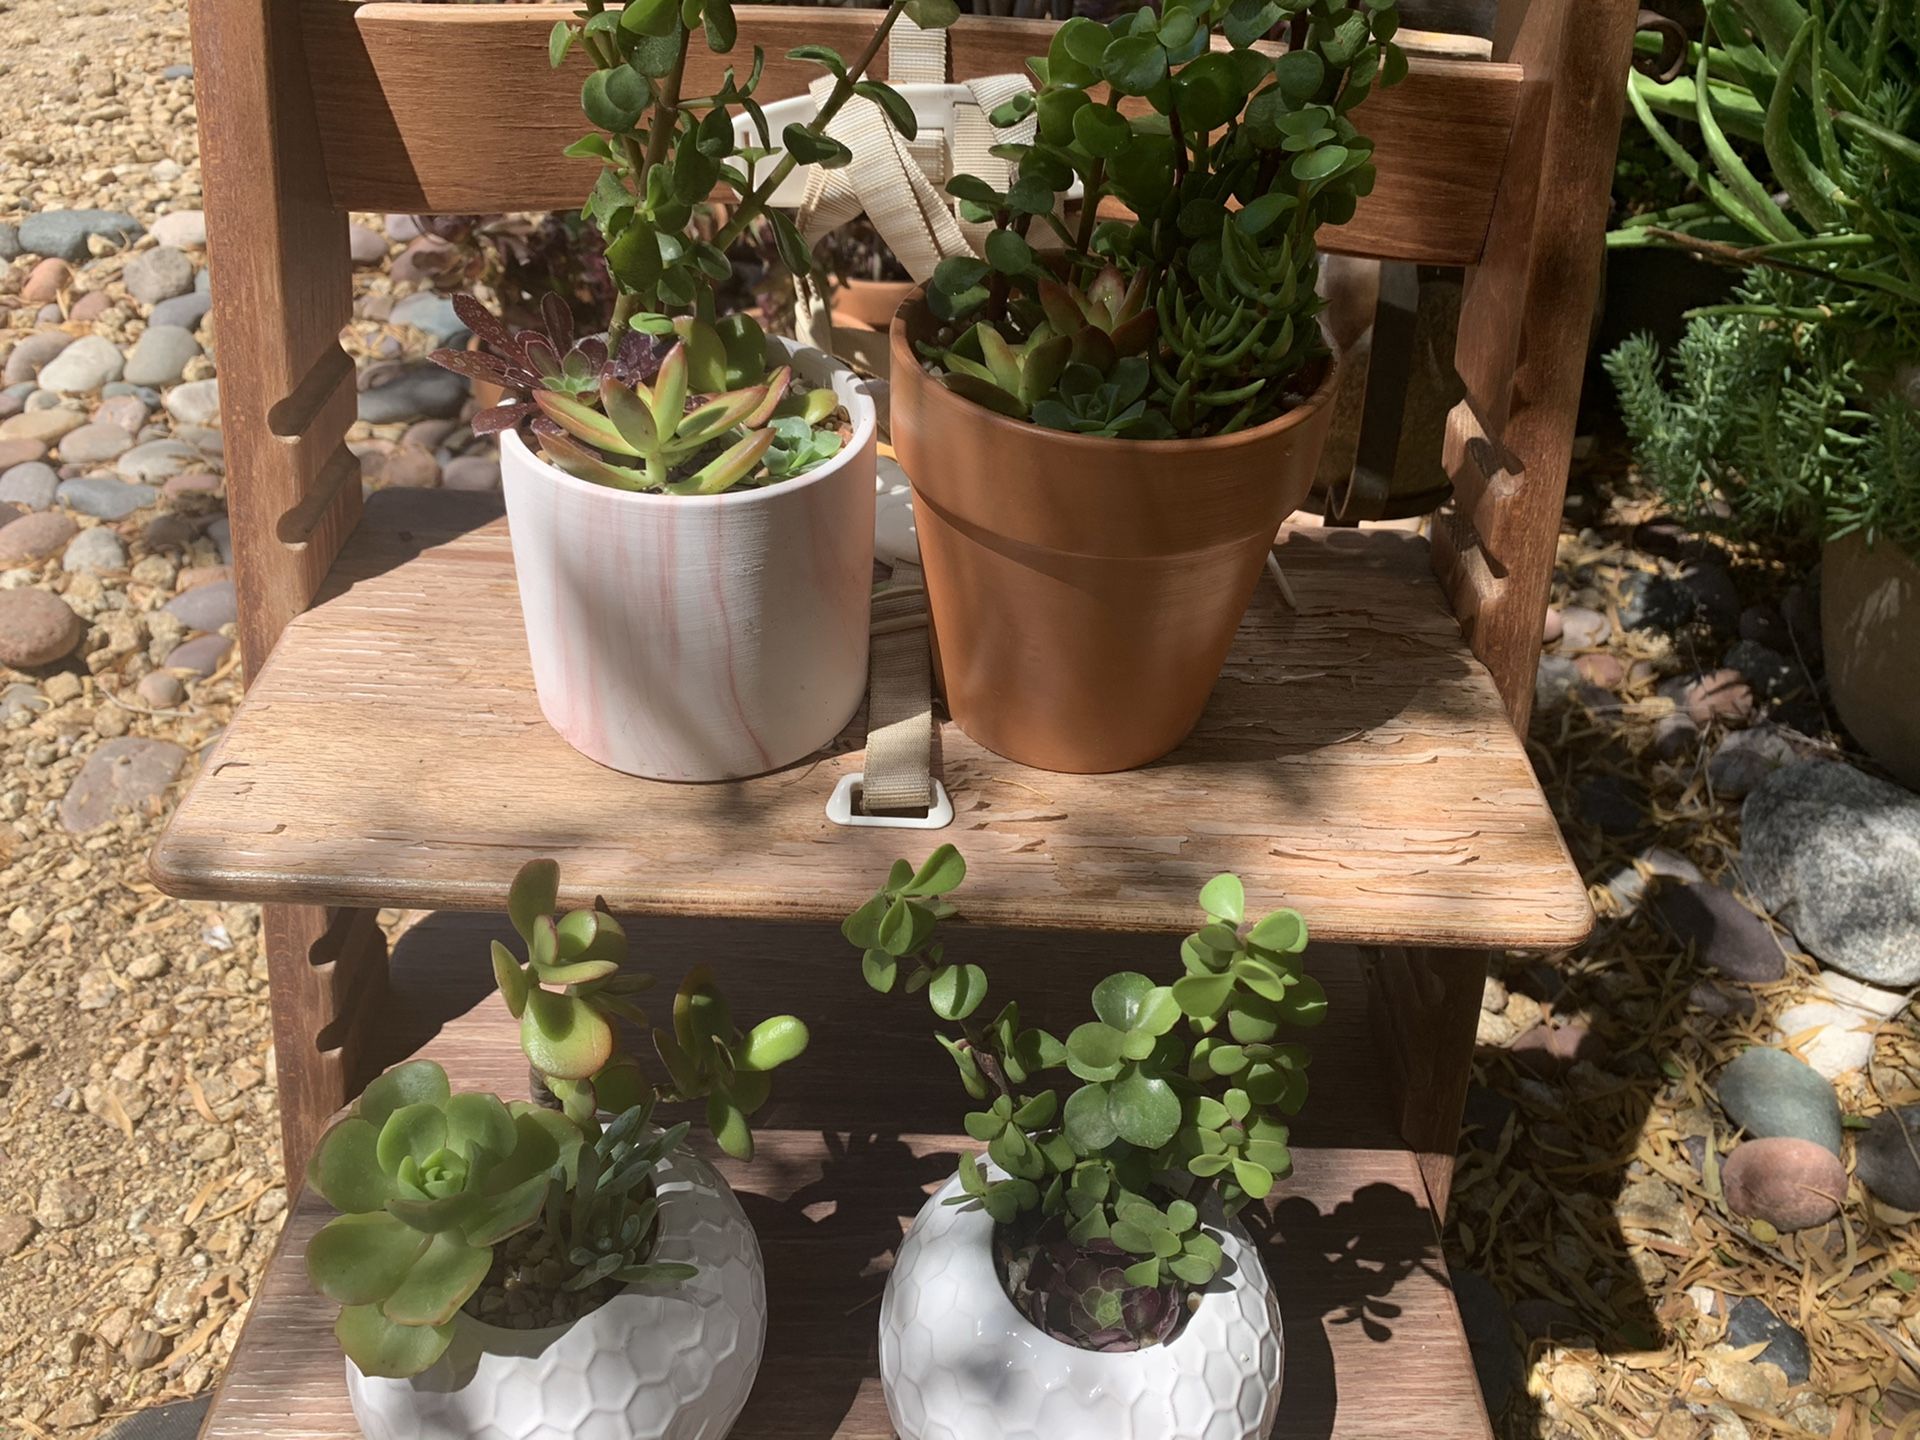 Real/live Succulent plants in a pot